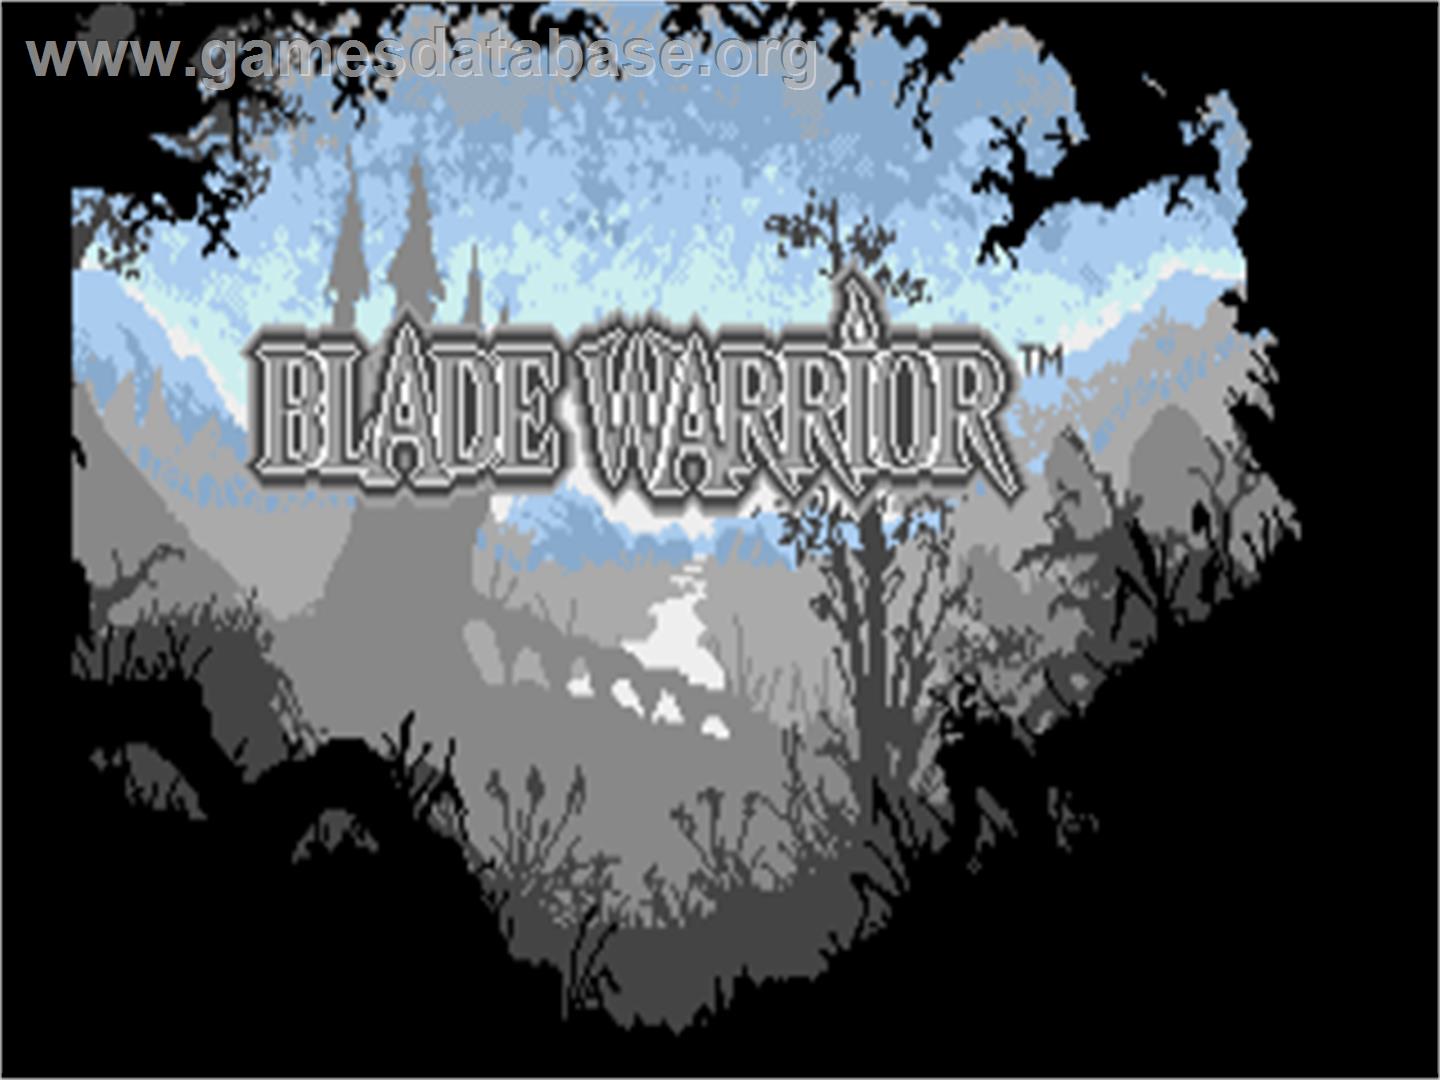 Blade Warrior - Commodore Amiga - Artwork - Title Screen